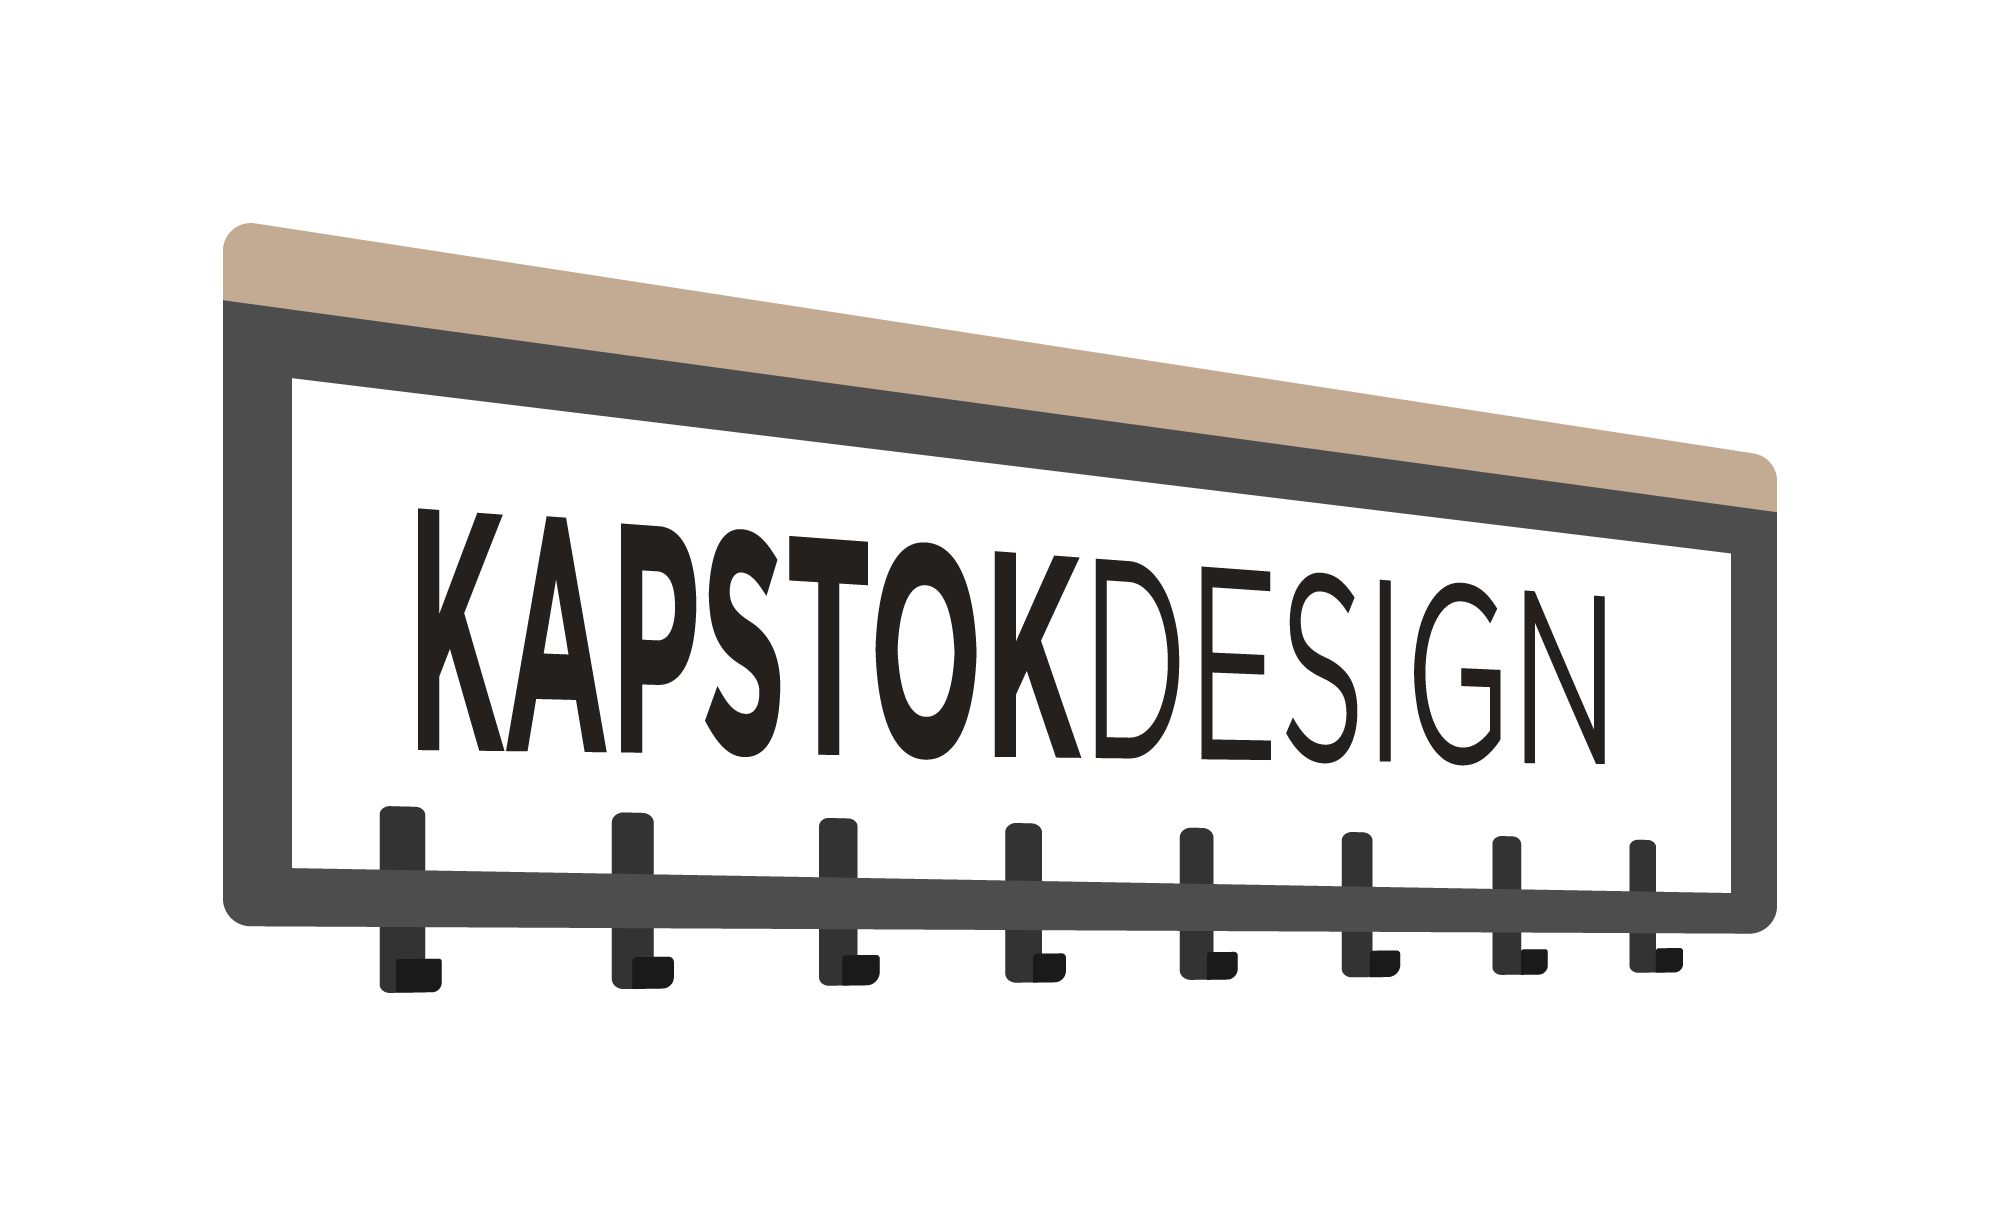 Kapstok Design